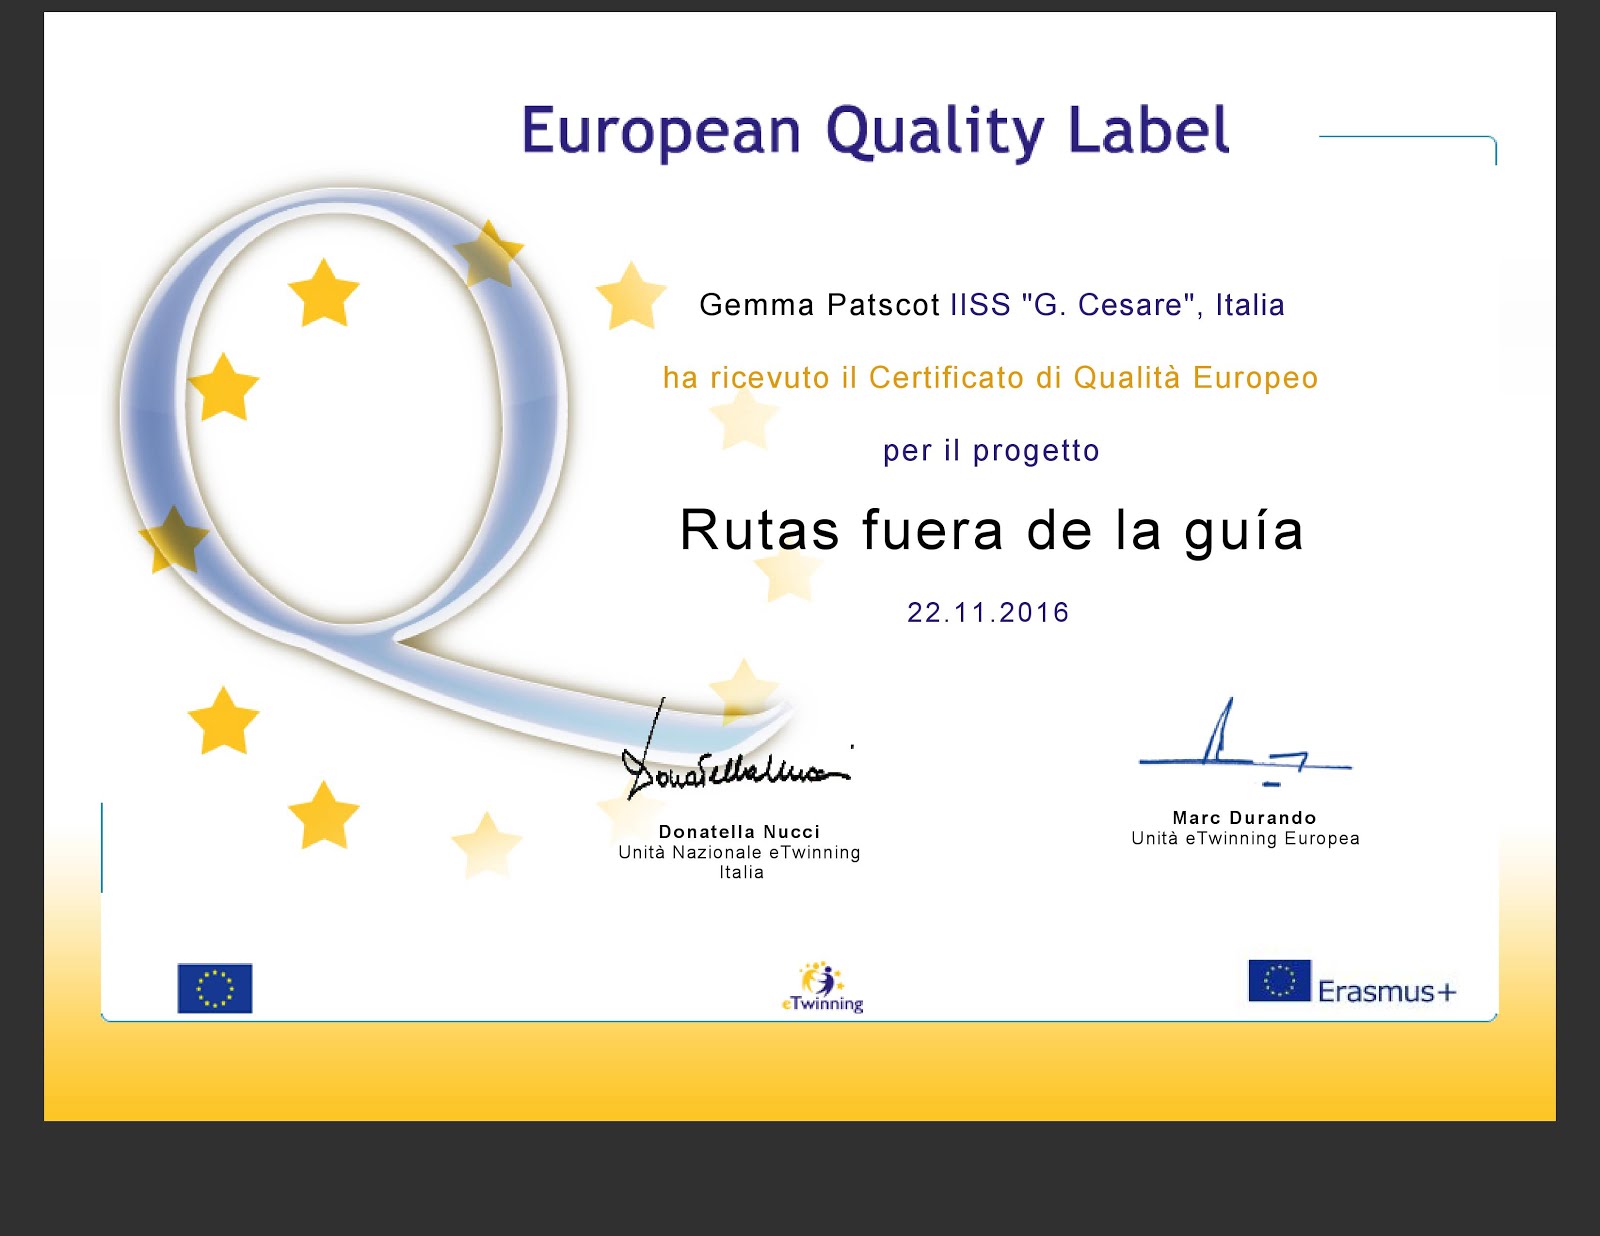 ETWINNING - European Quality Label